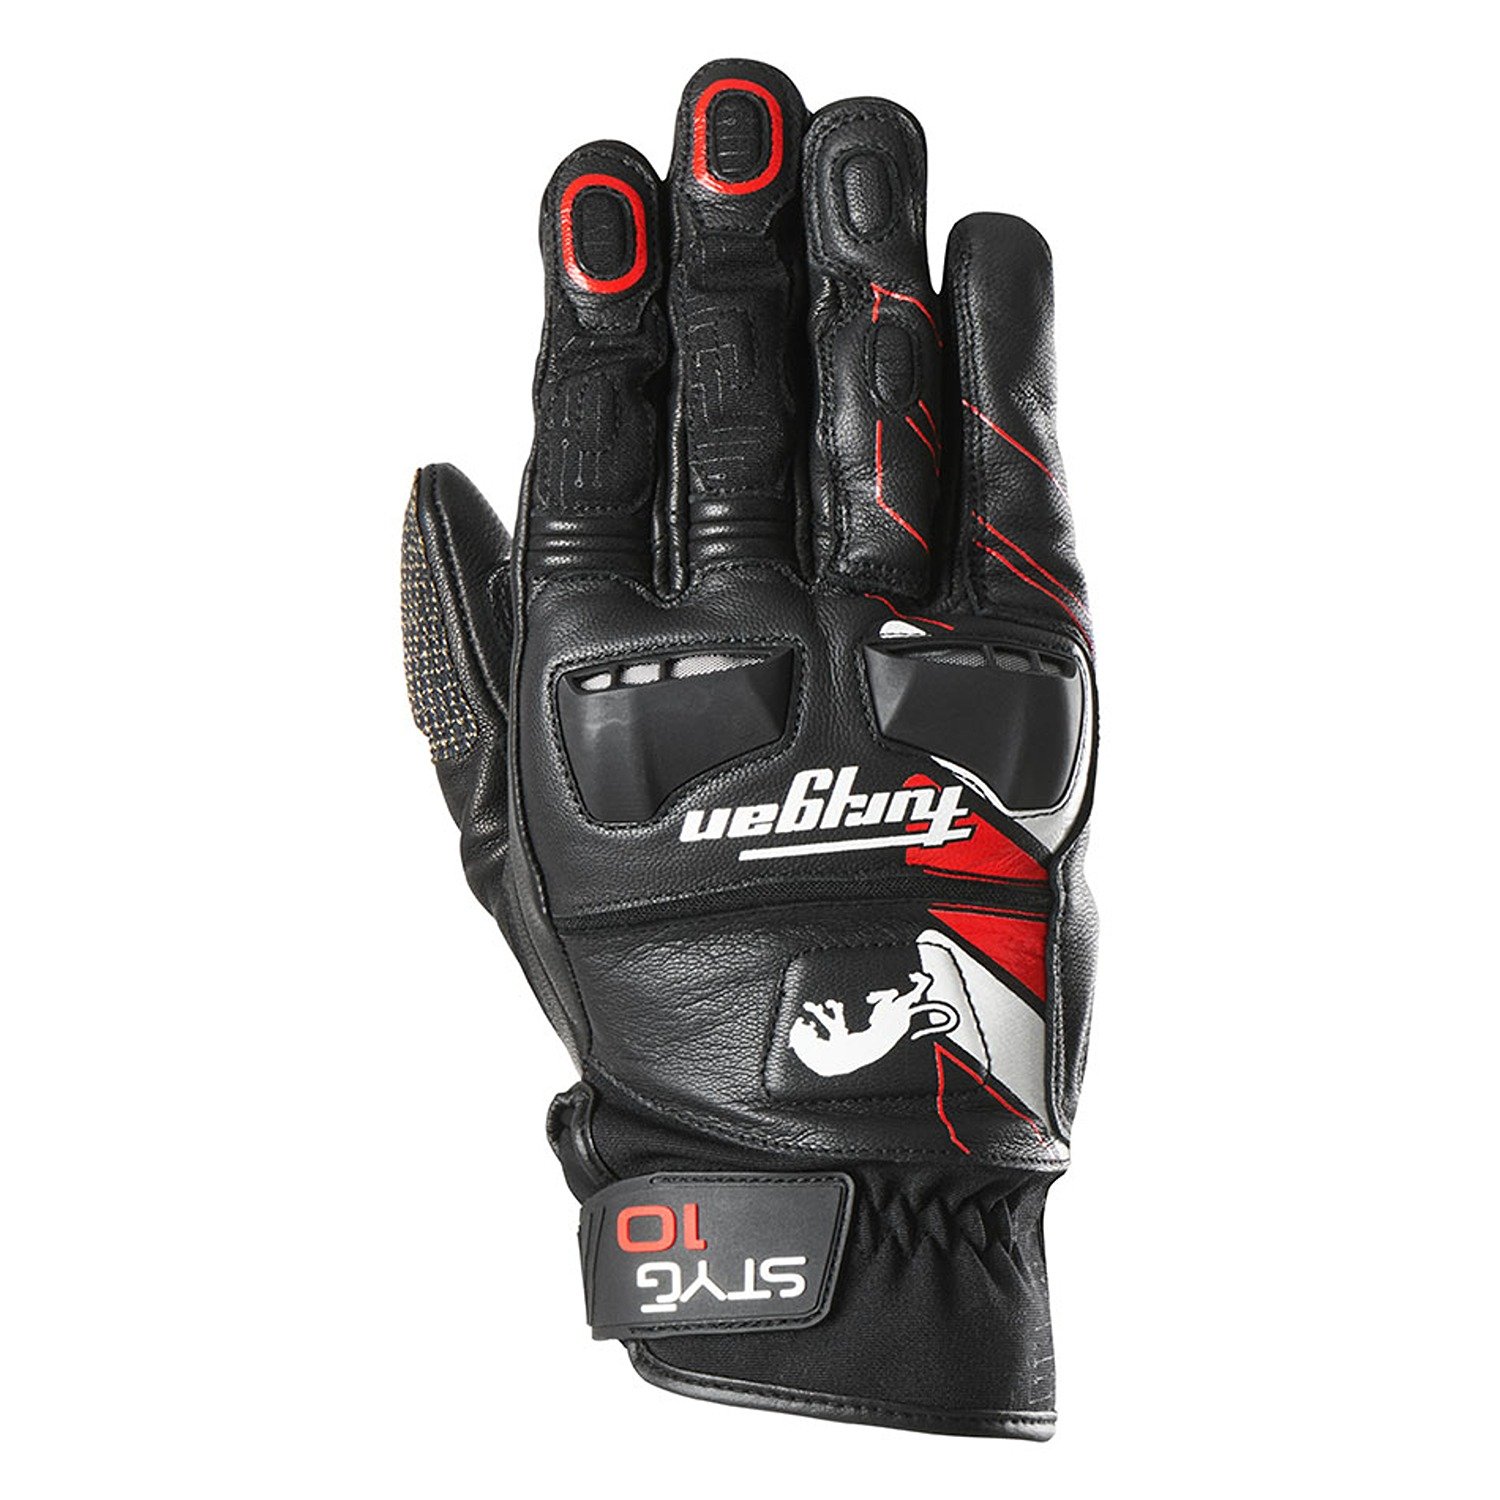 Image of Furygan Styg10 Gloves Black White Red Size 3XL EN